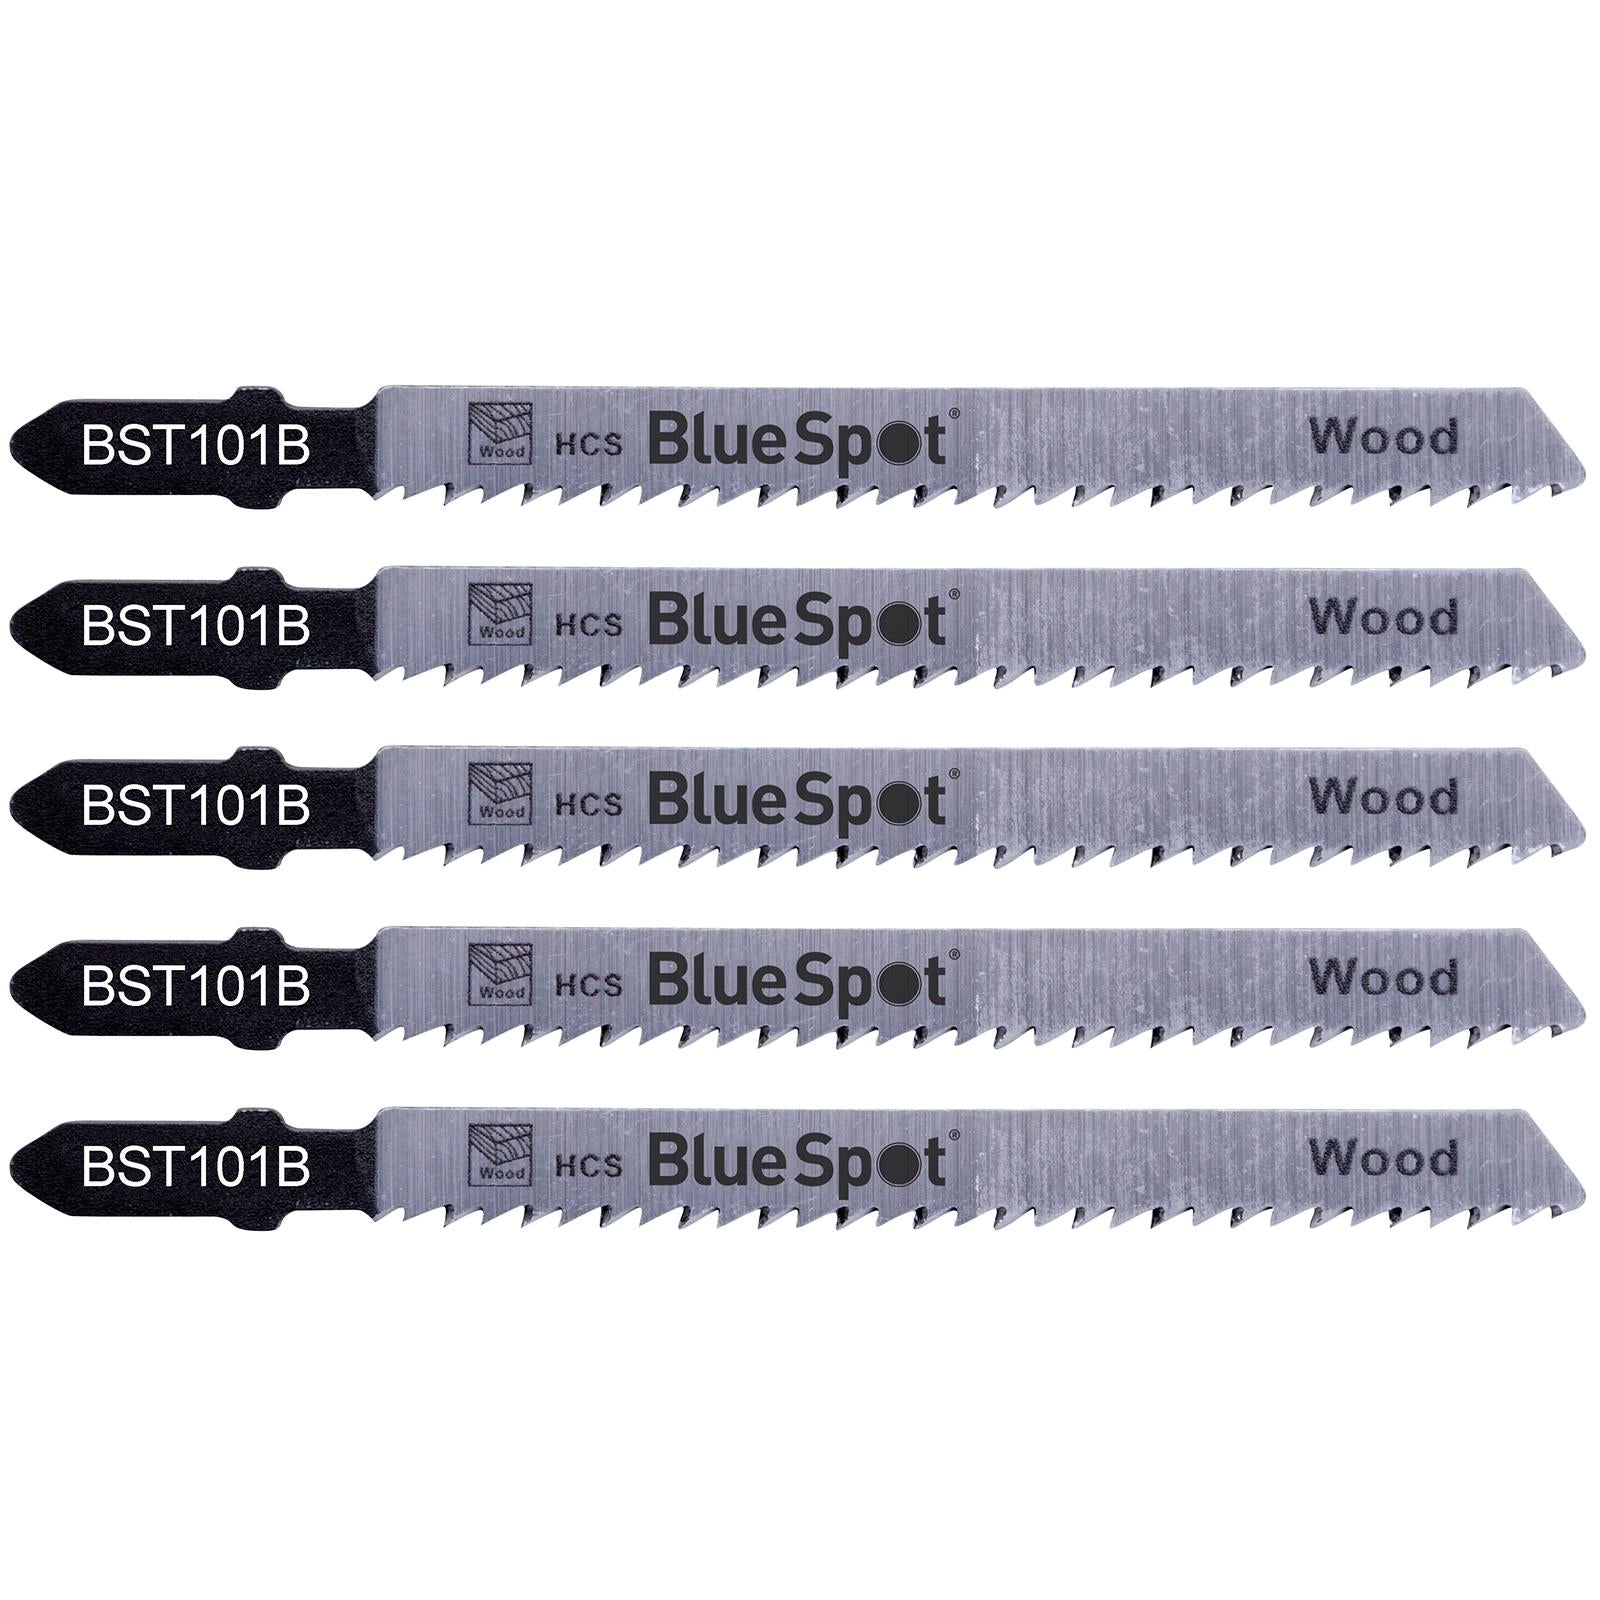 BlueSpot Jigsaw Blades 5 Piece Clean Cut for Wood 10 TPI T101B